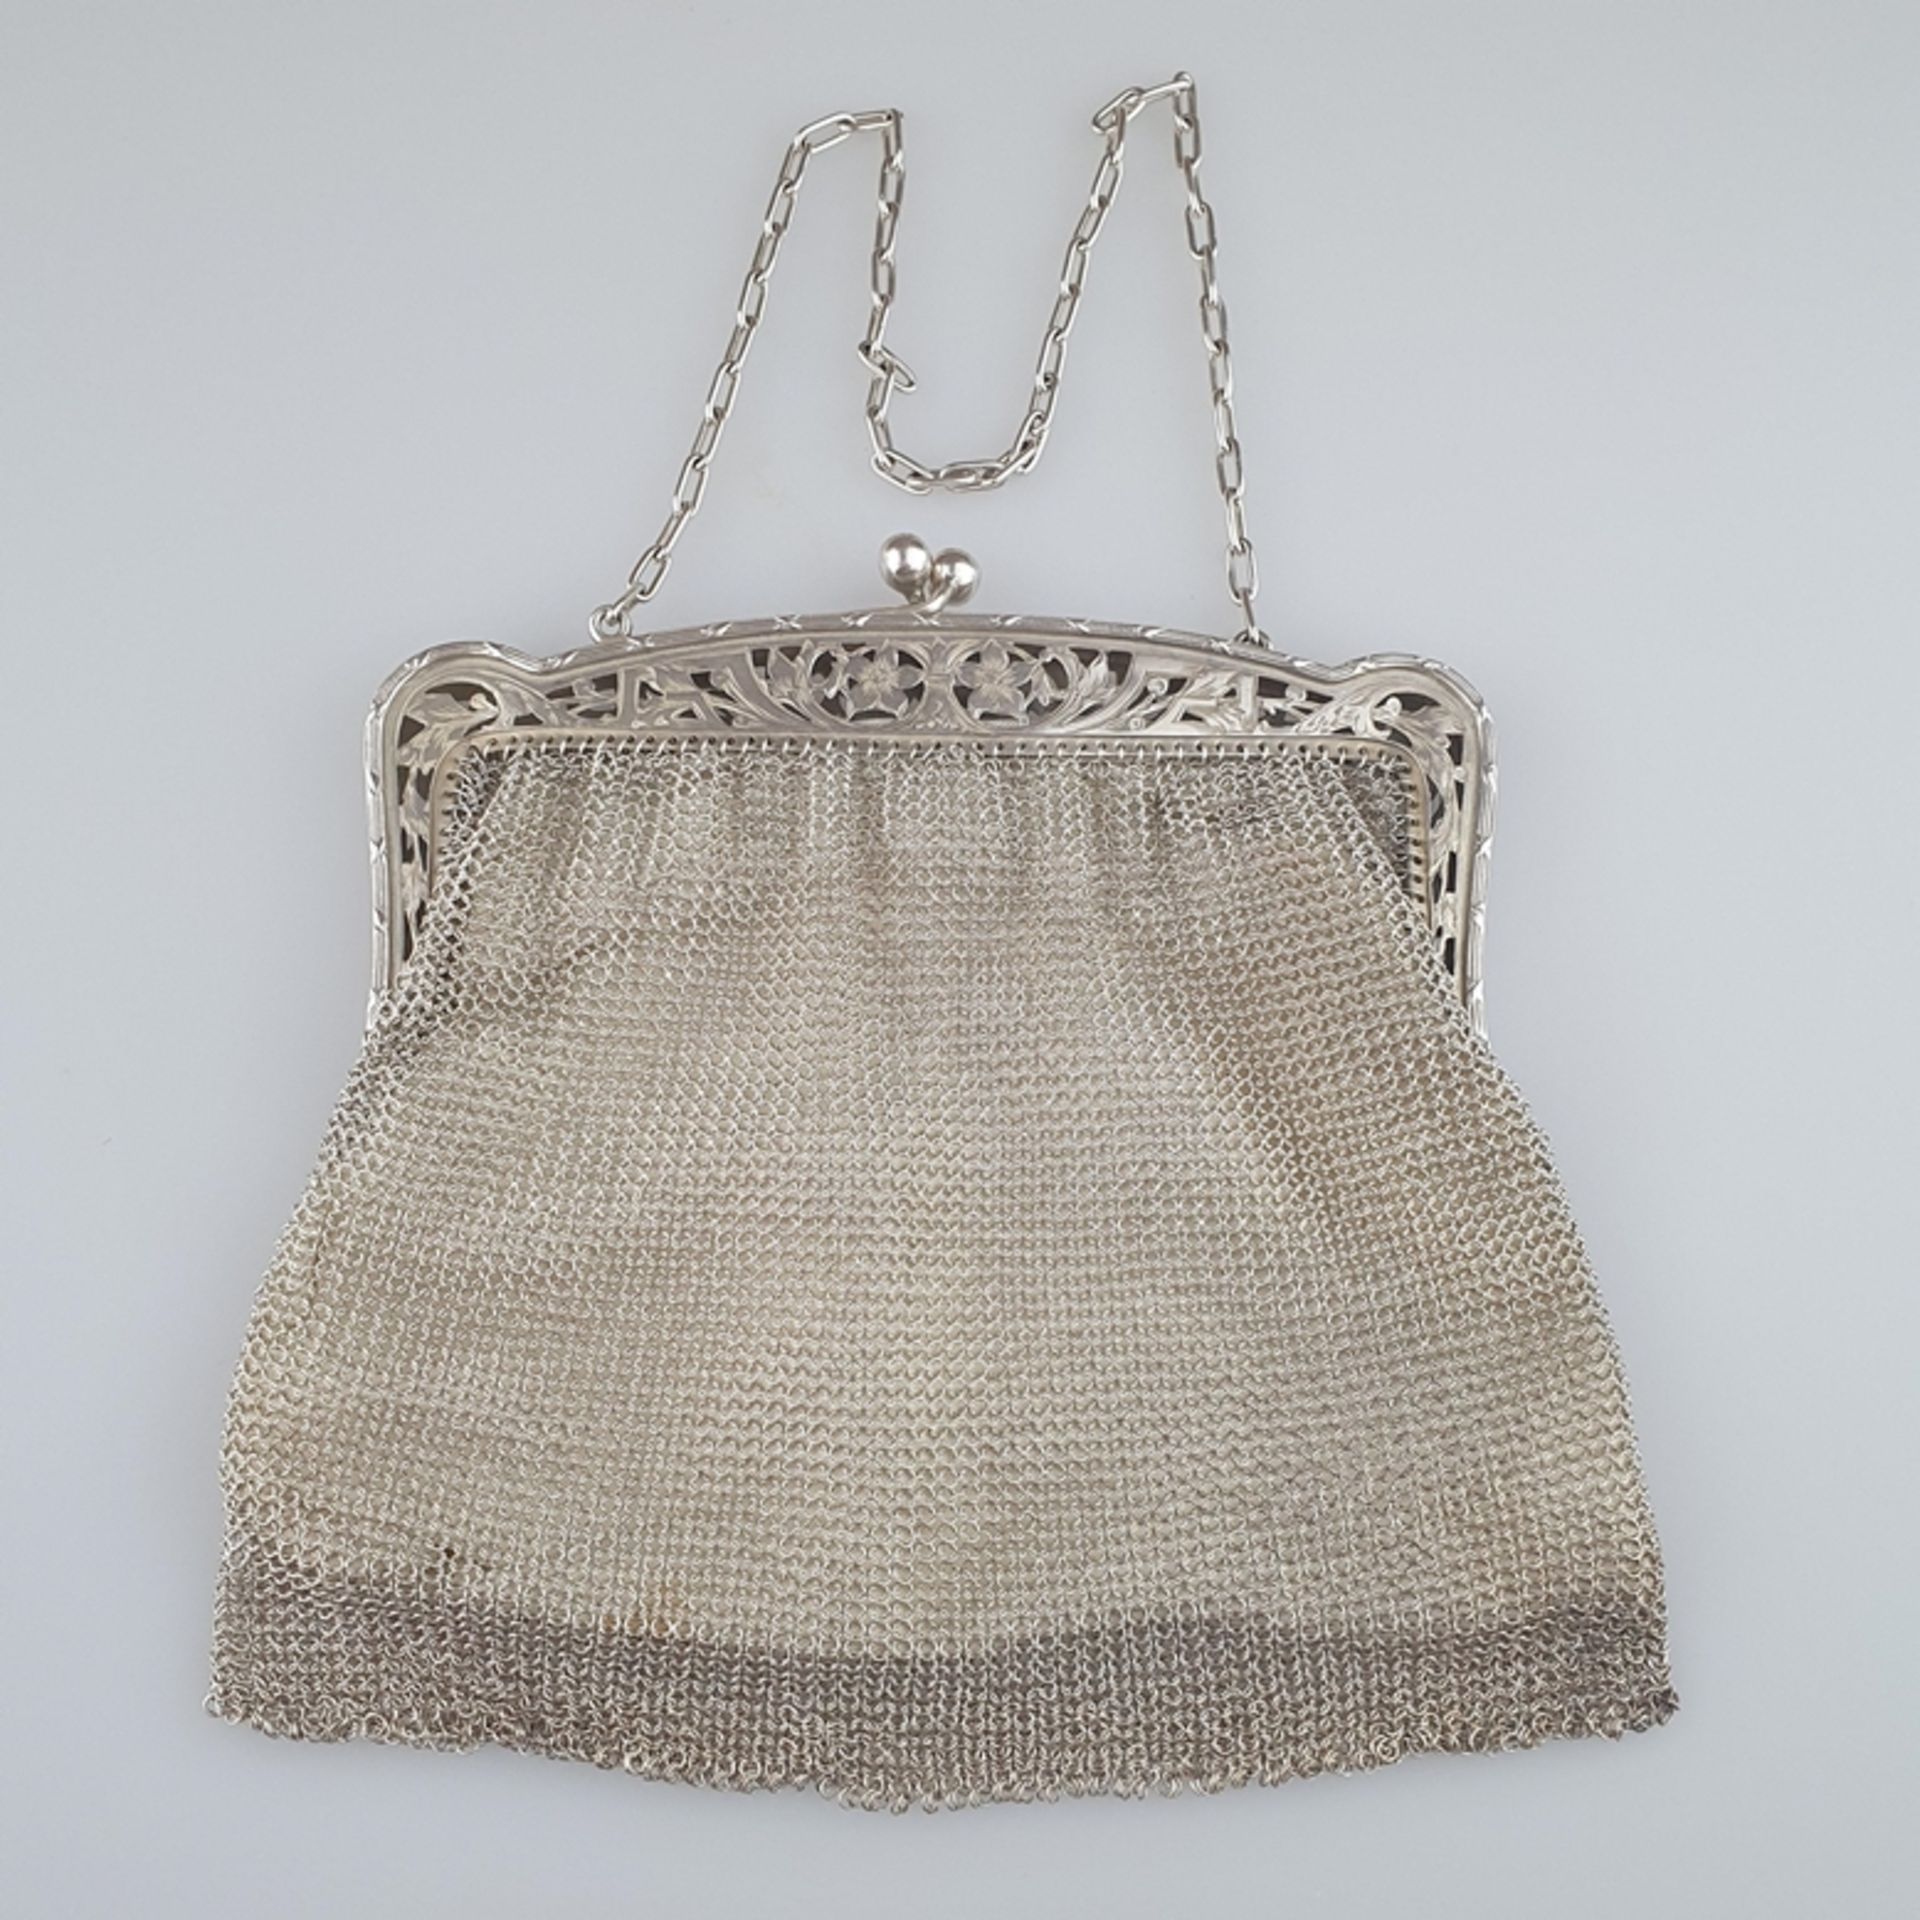 Kettentasche - um 1900, Silber, rechteckige Form aus fein verwirkten Kettenglie